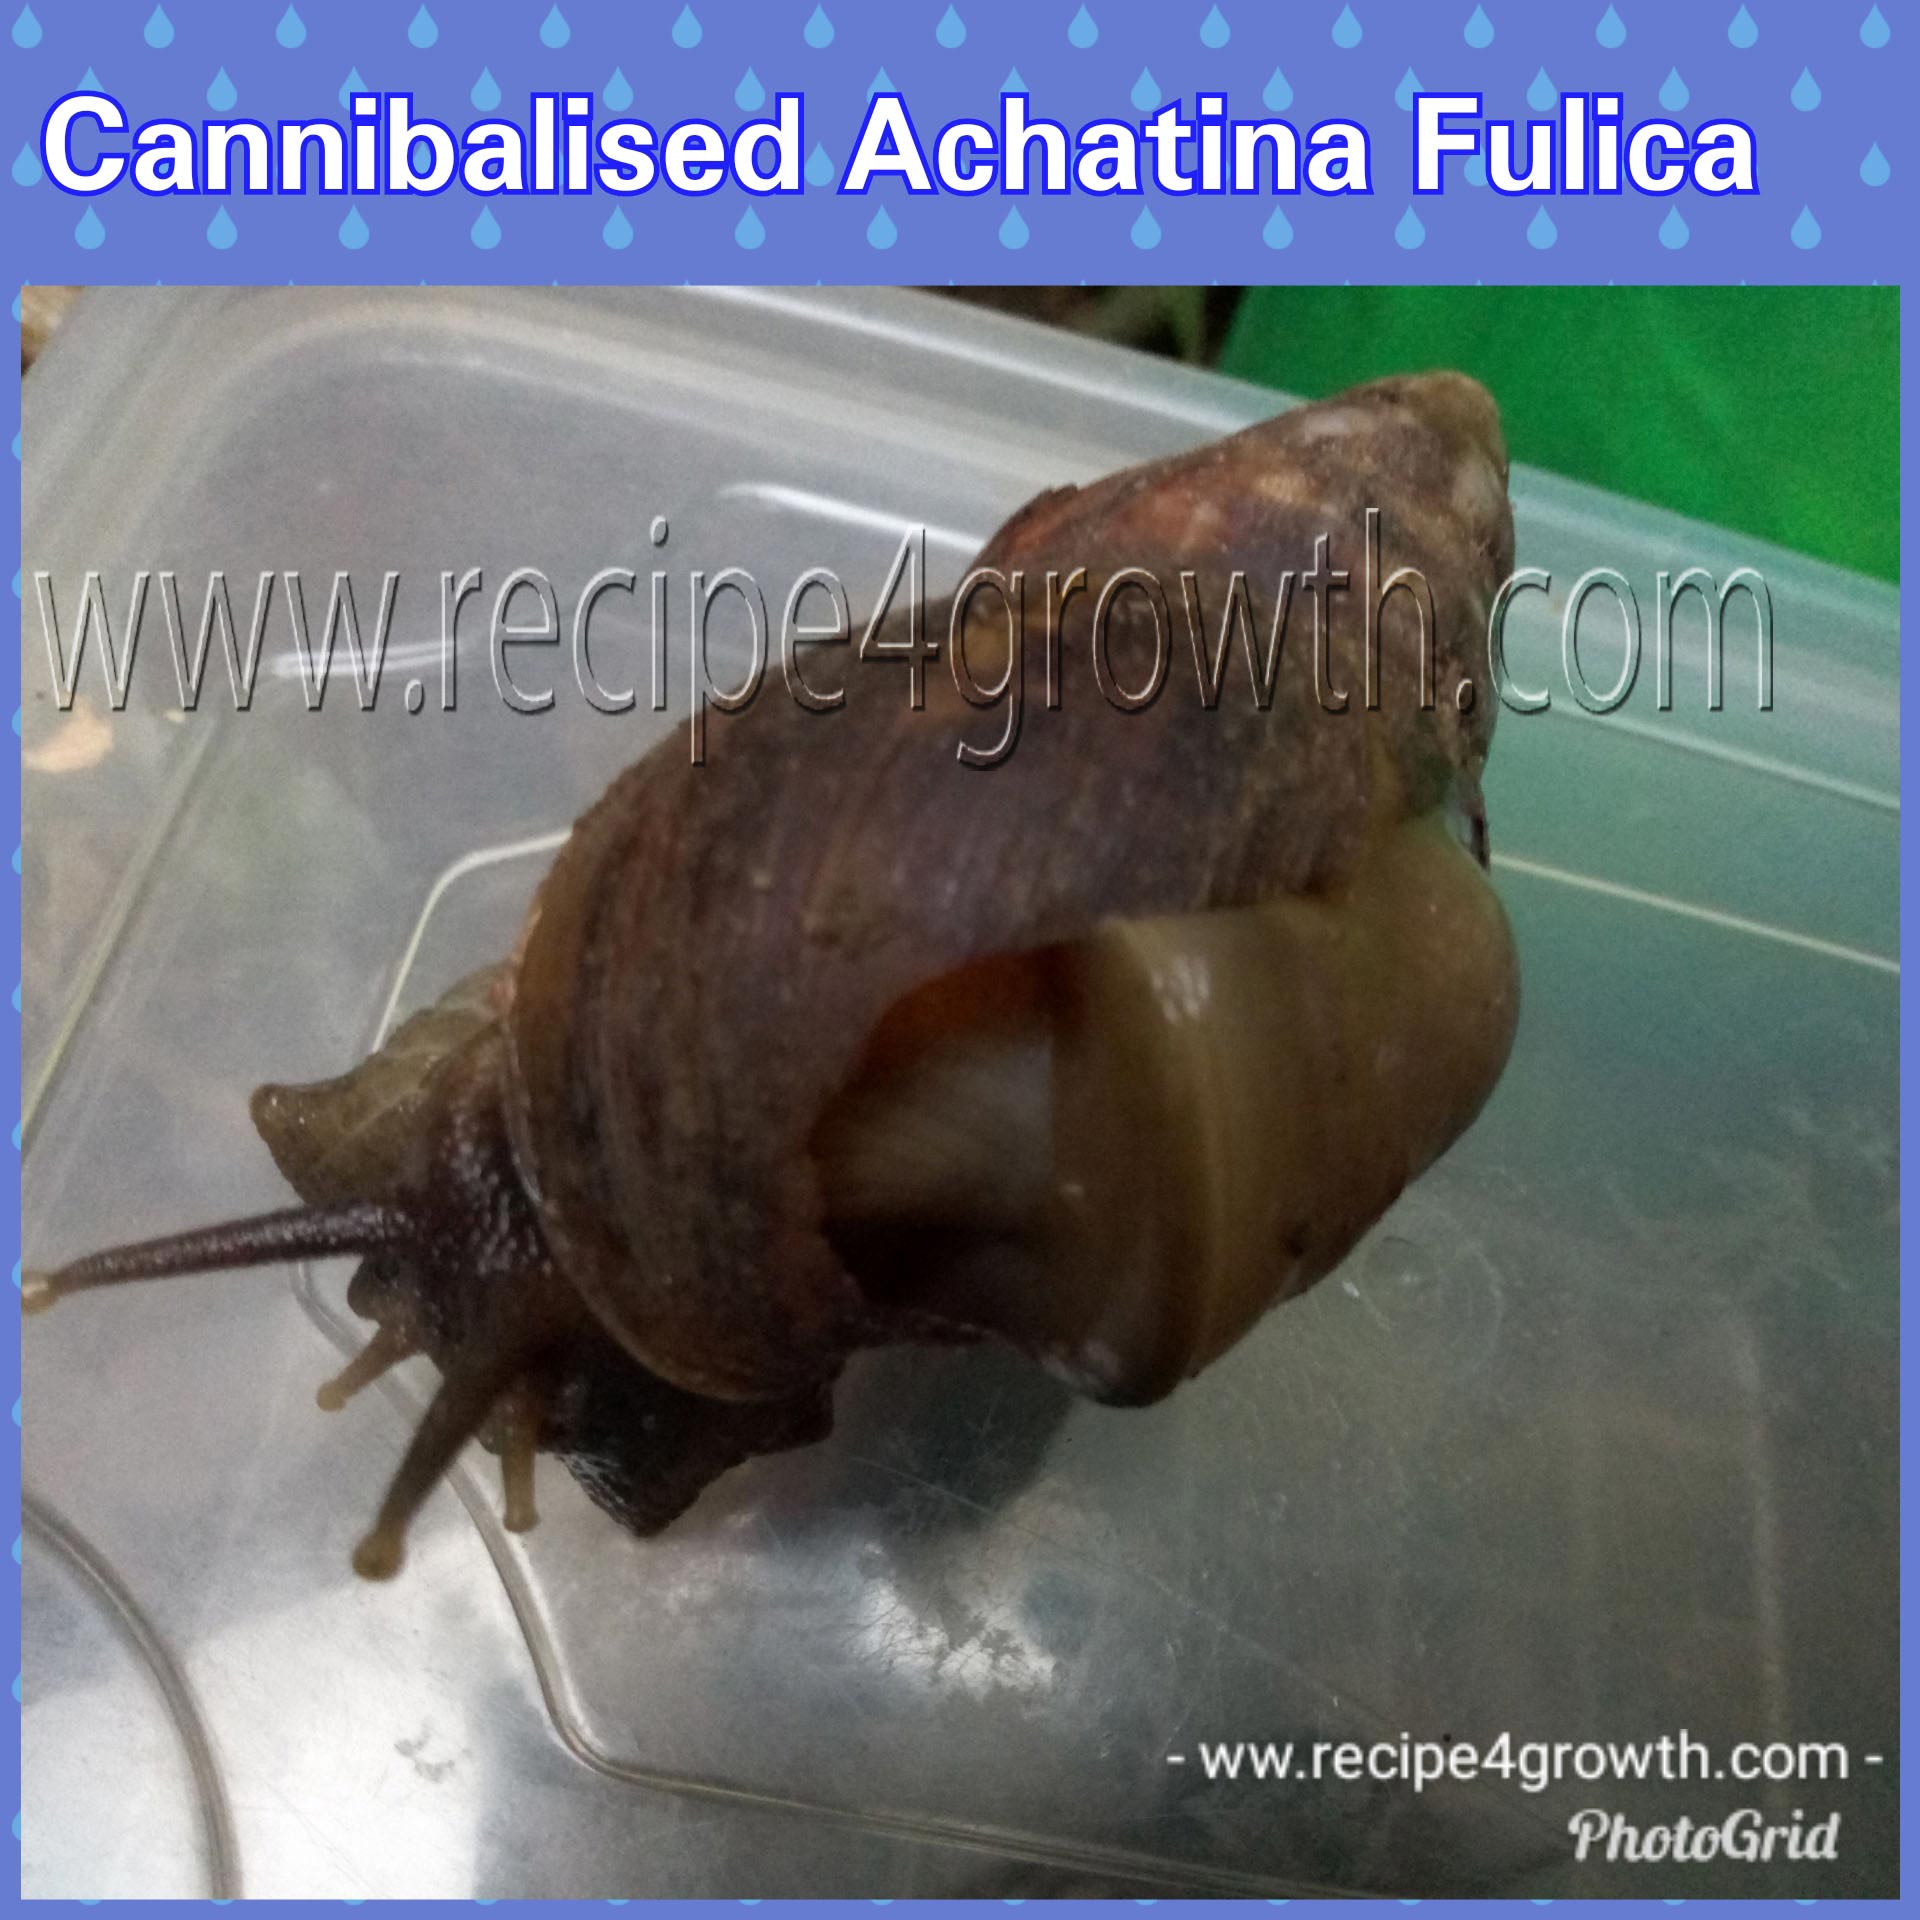 Achatina Fulica cannibalised 